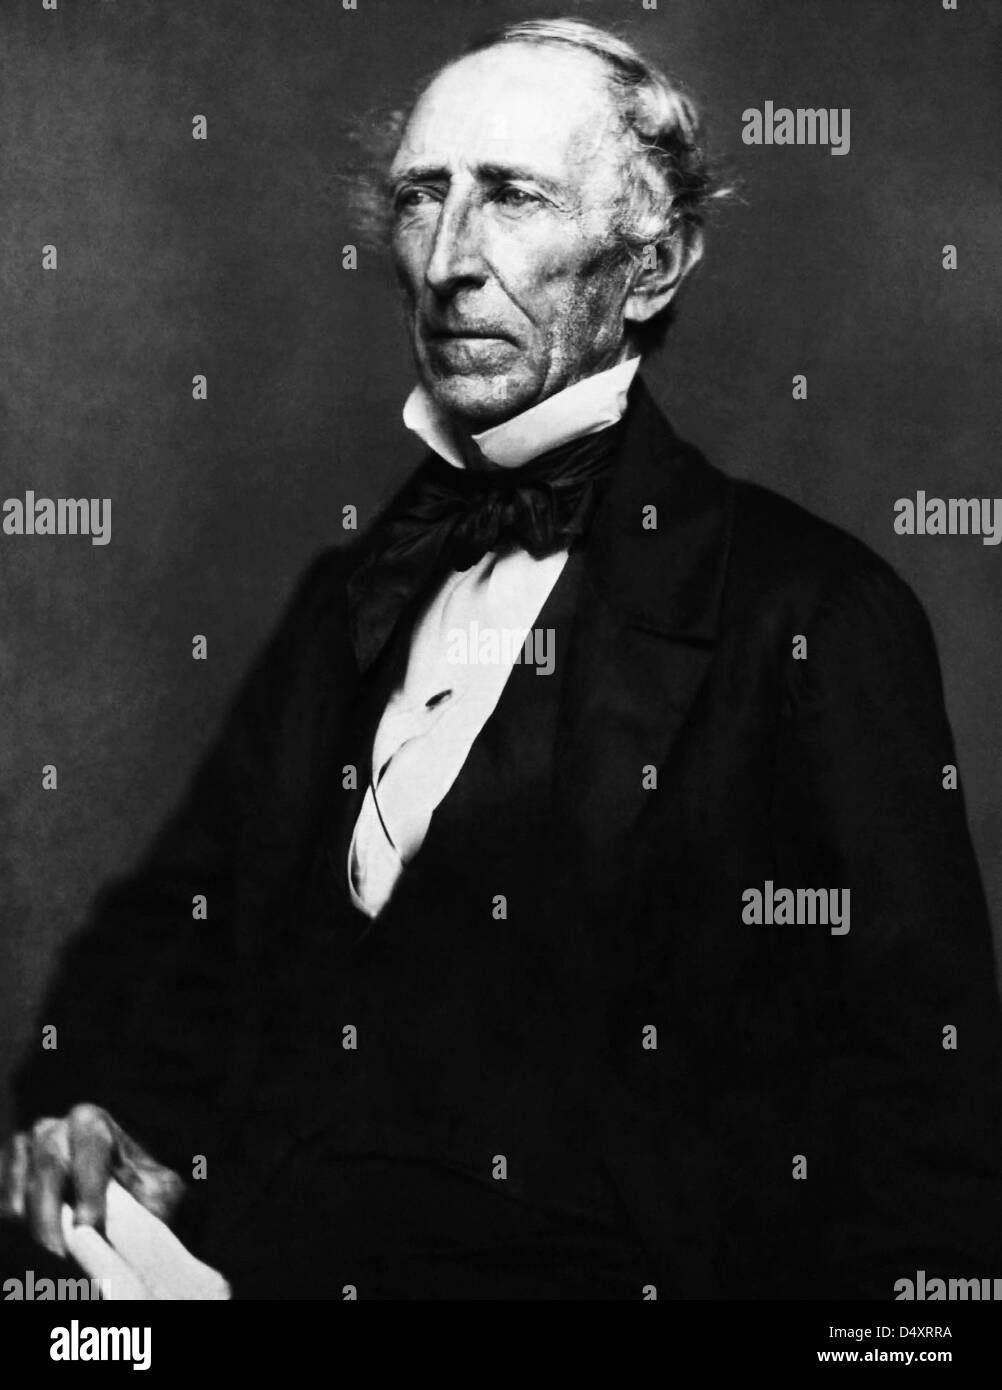 Vintage-Portraitfoto von John Tyler (1790 – 1862) – dem 10. US-Präsidenten (1841 - 1845). Foto ca. 1861. Stockfoto